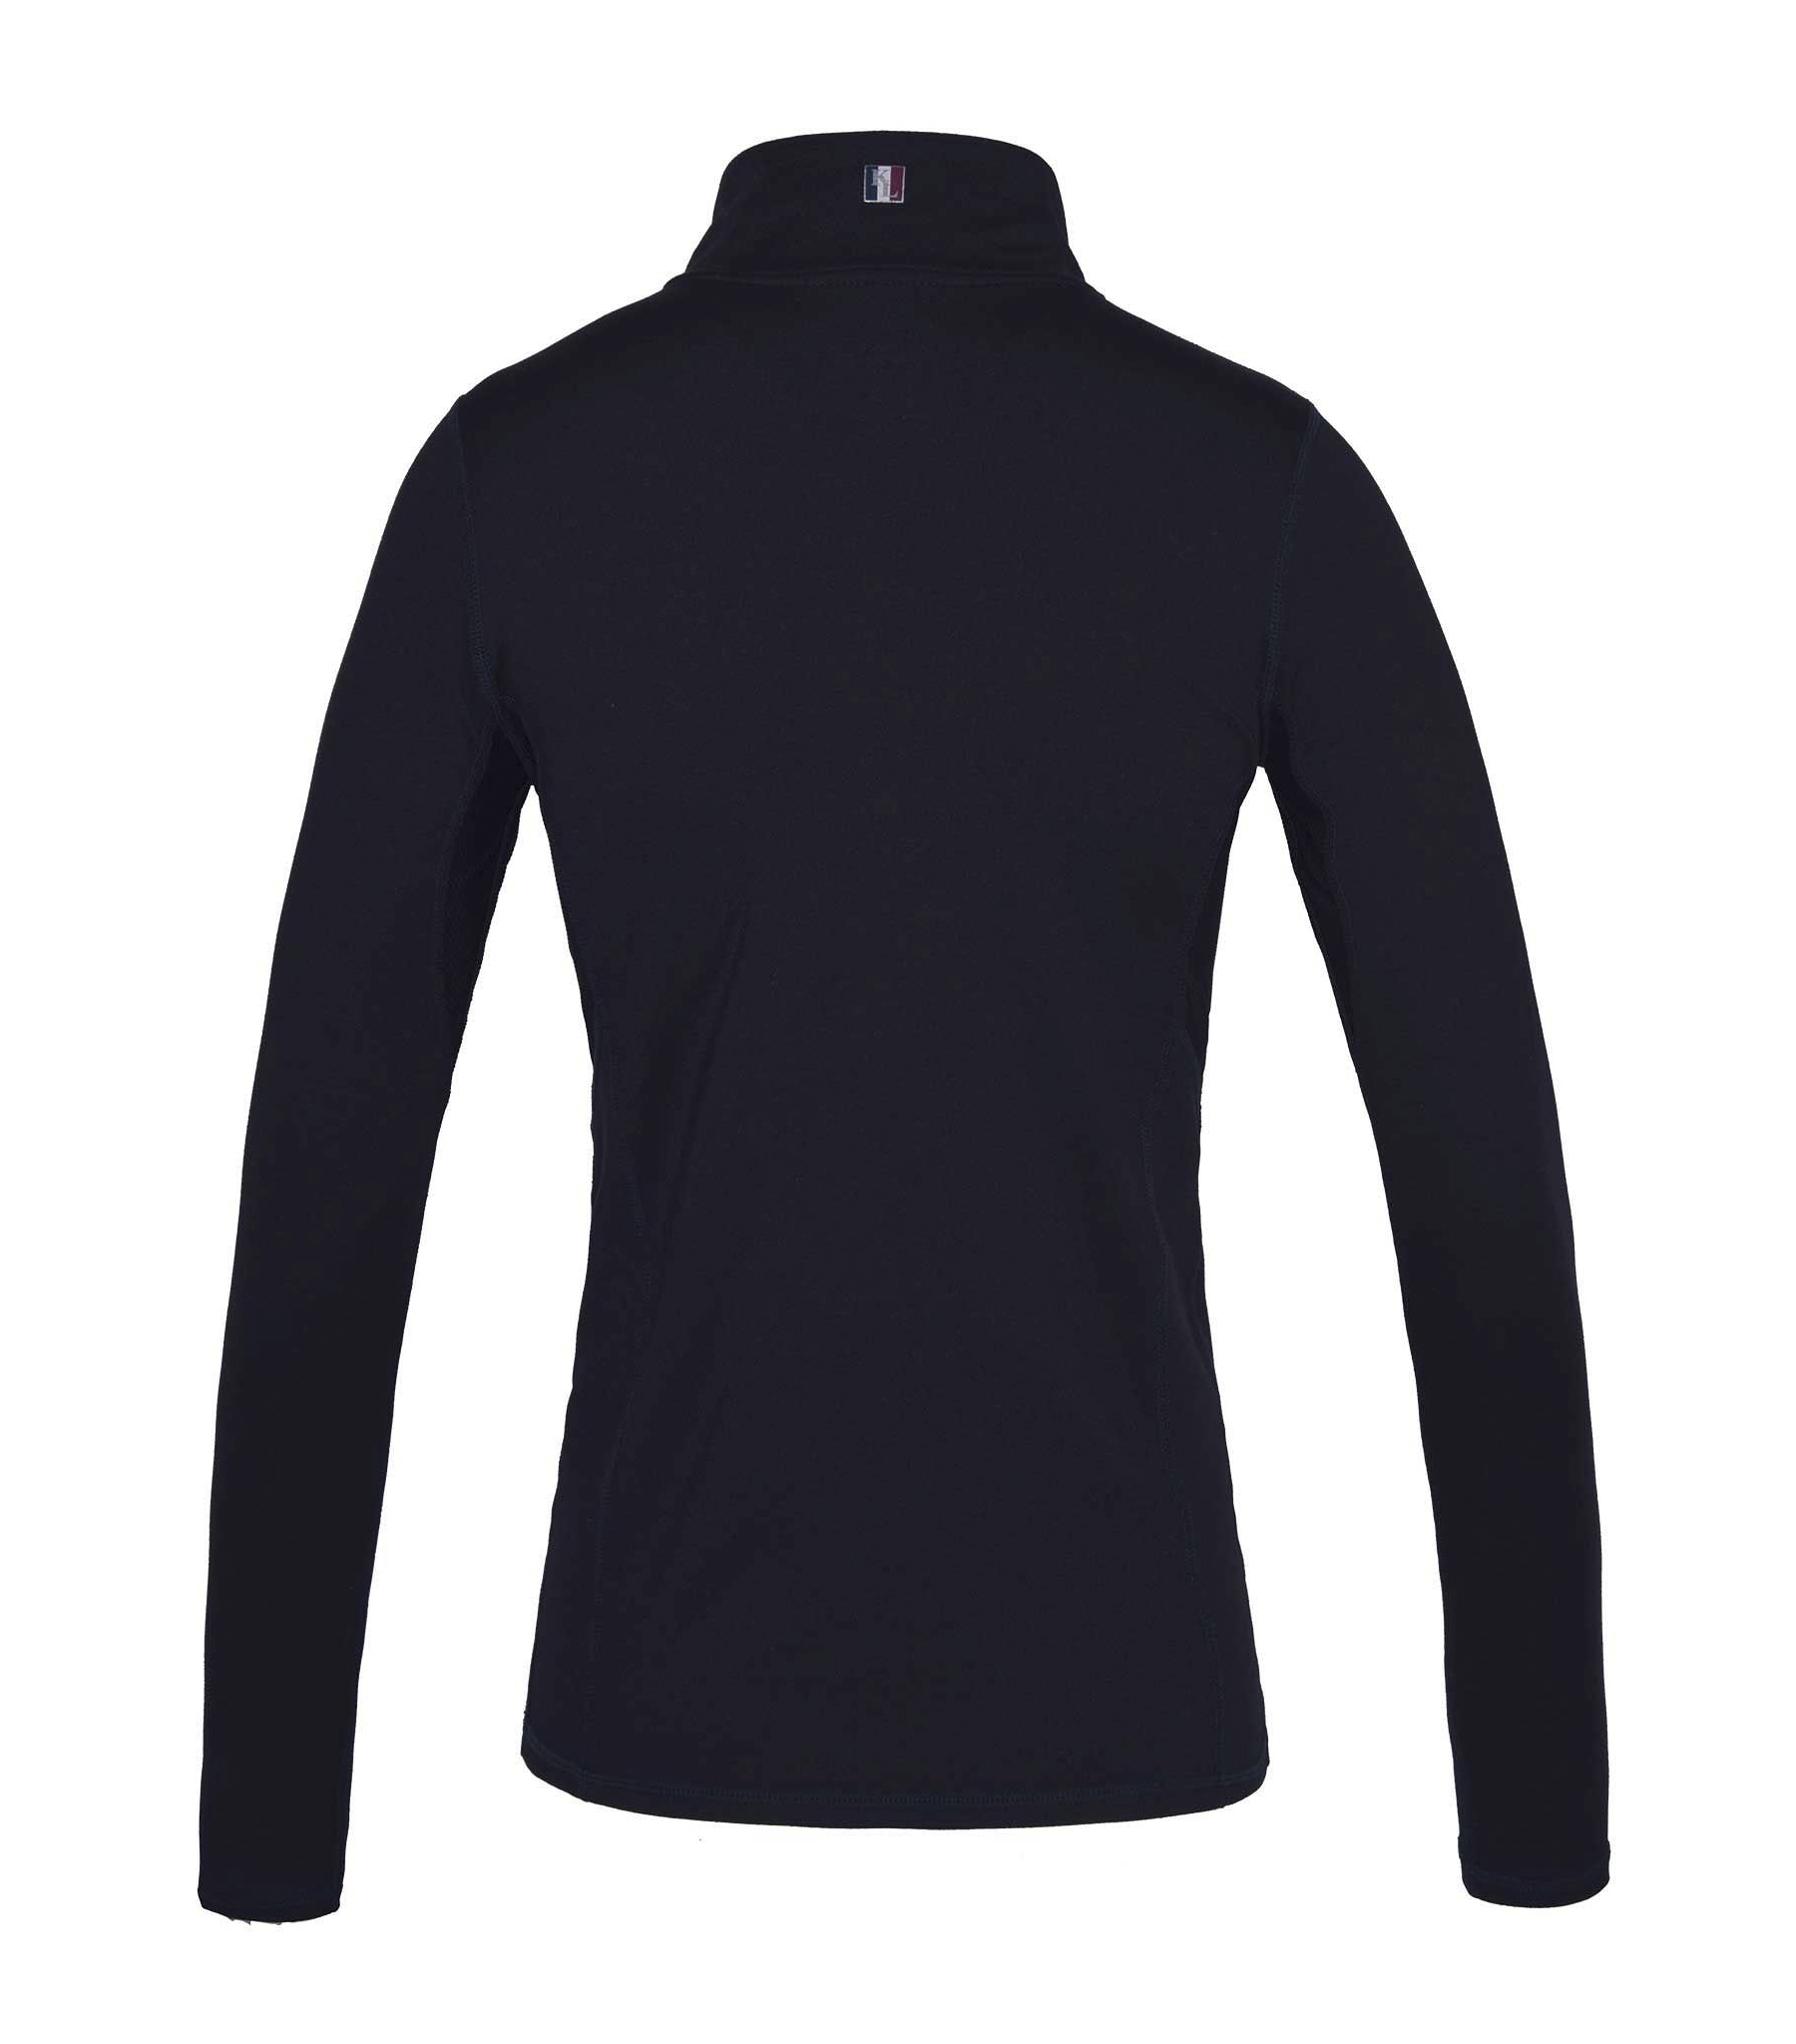 KINGSLAND Classic Damen Langarm Training Shirt - black - XL - 2